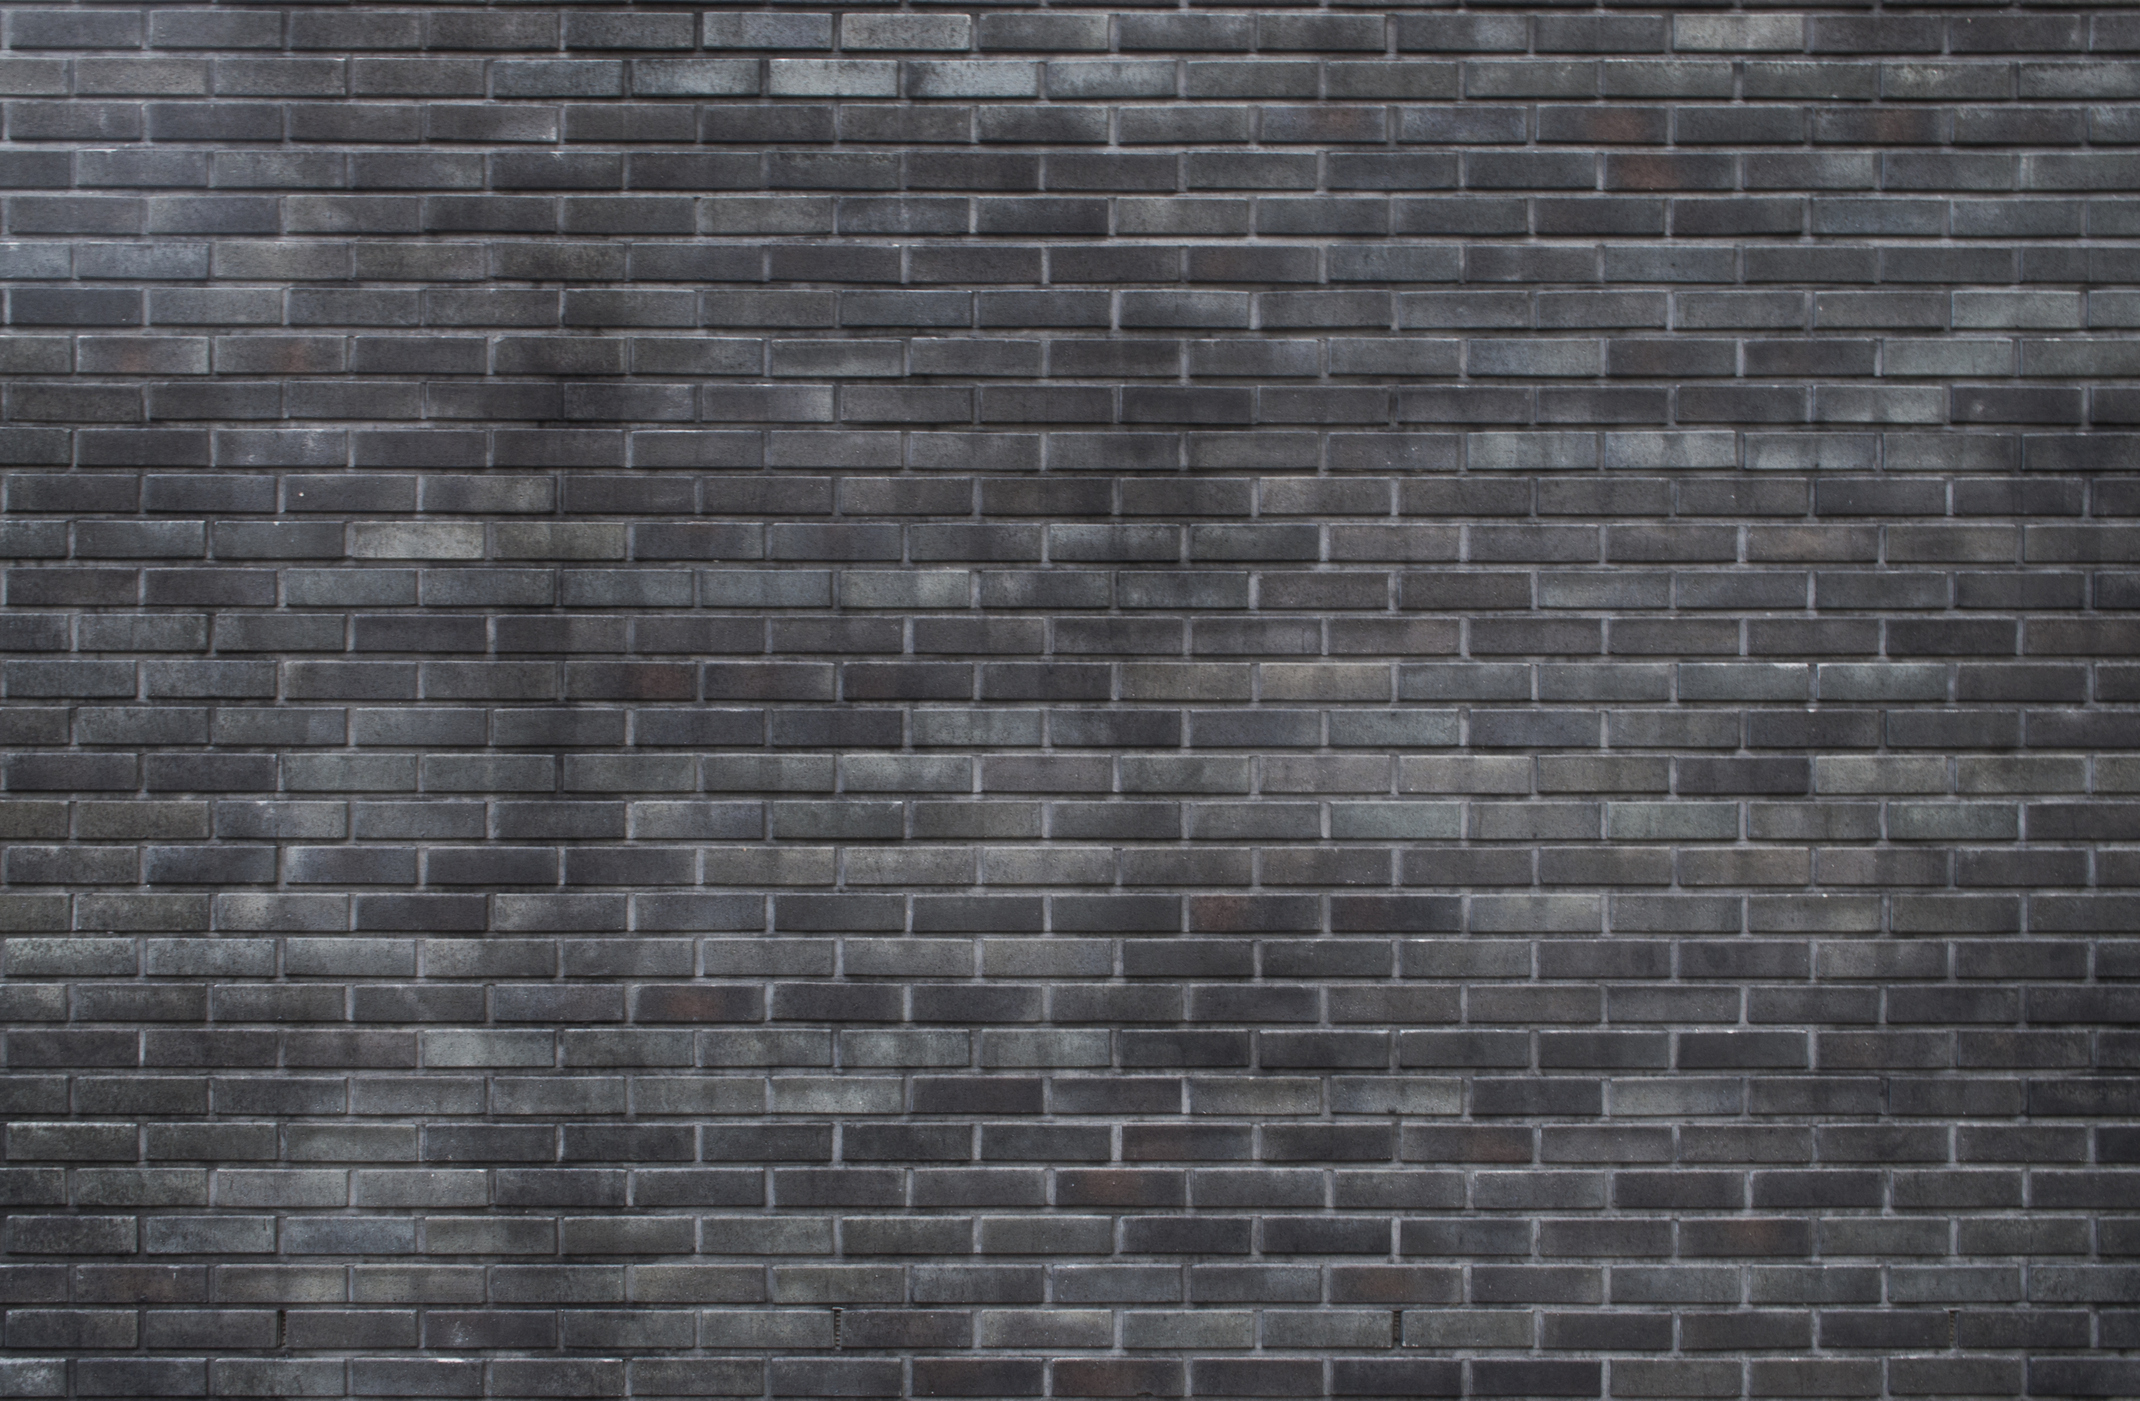 Black grunge brick wall texture background - Spry Ideas